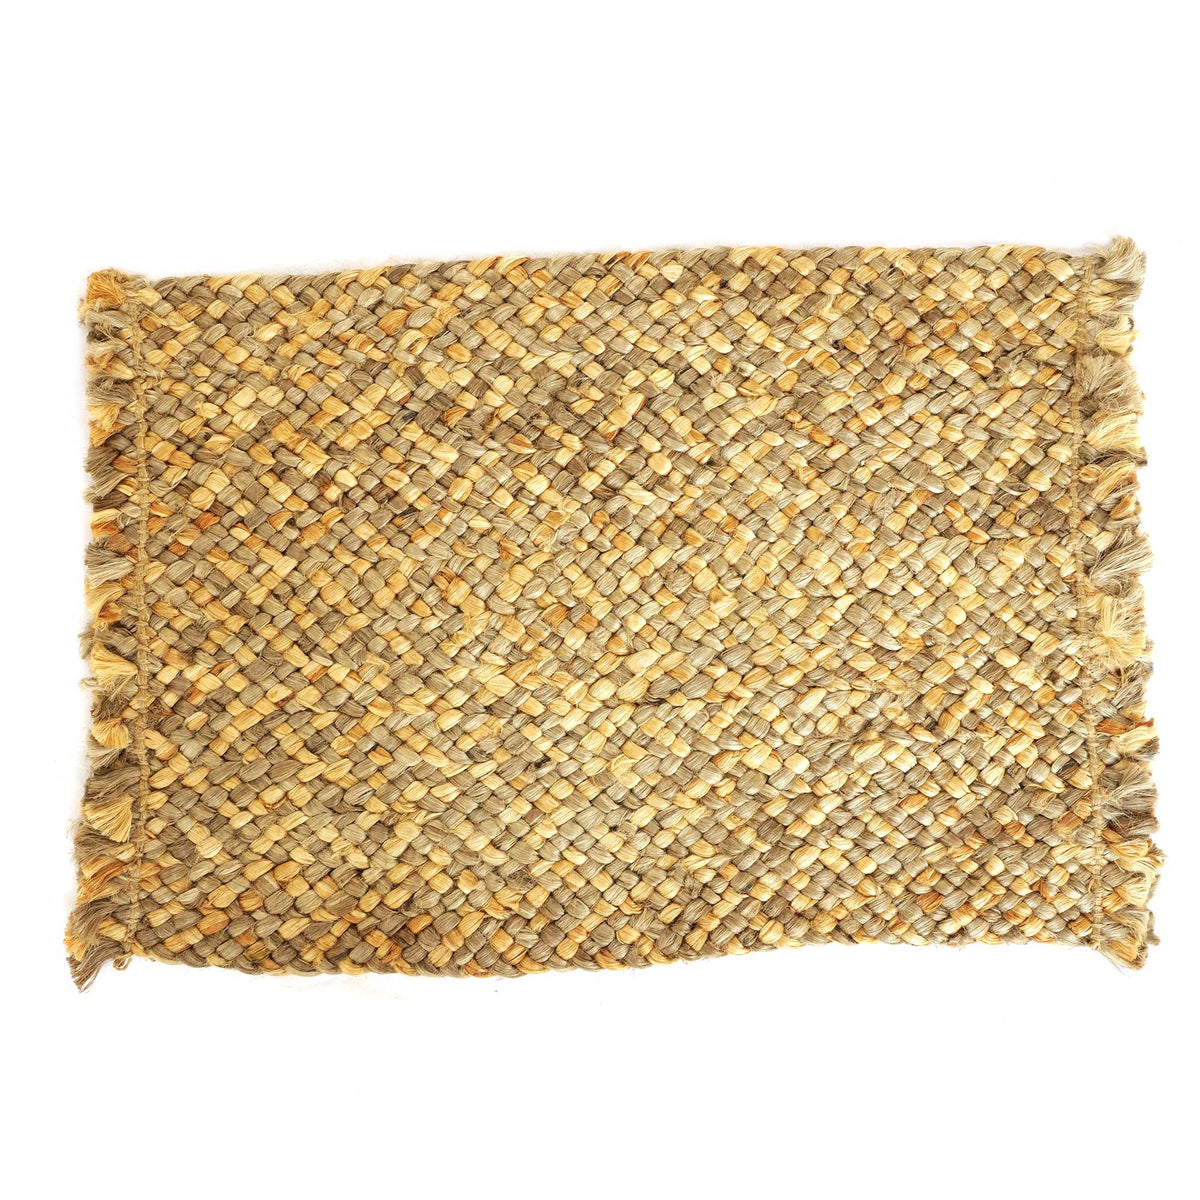 OnlyMat Braided Luxe Mat -  Hand braided Jute Rug - Handmade, Organic, Natural and Sustainable